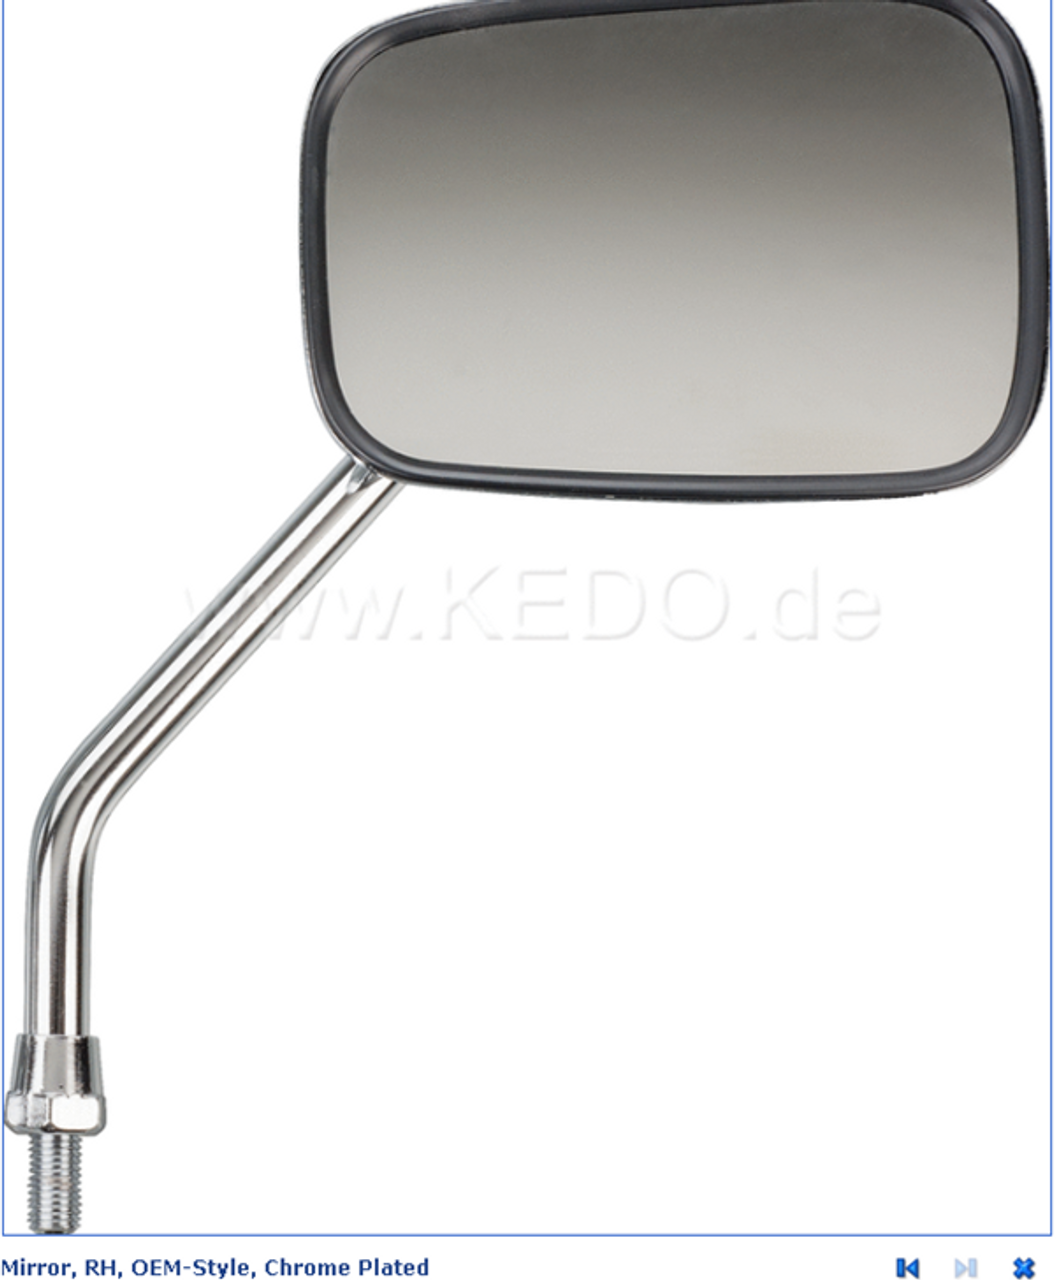 Item 50005: Mirror, RH, OEM-Style, Chrome Plated